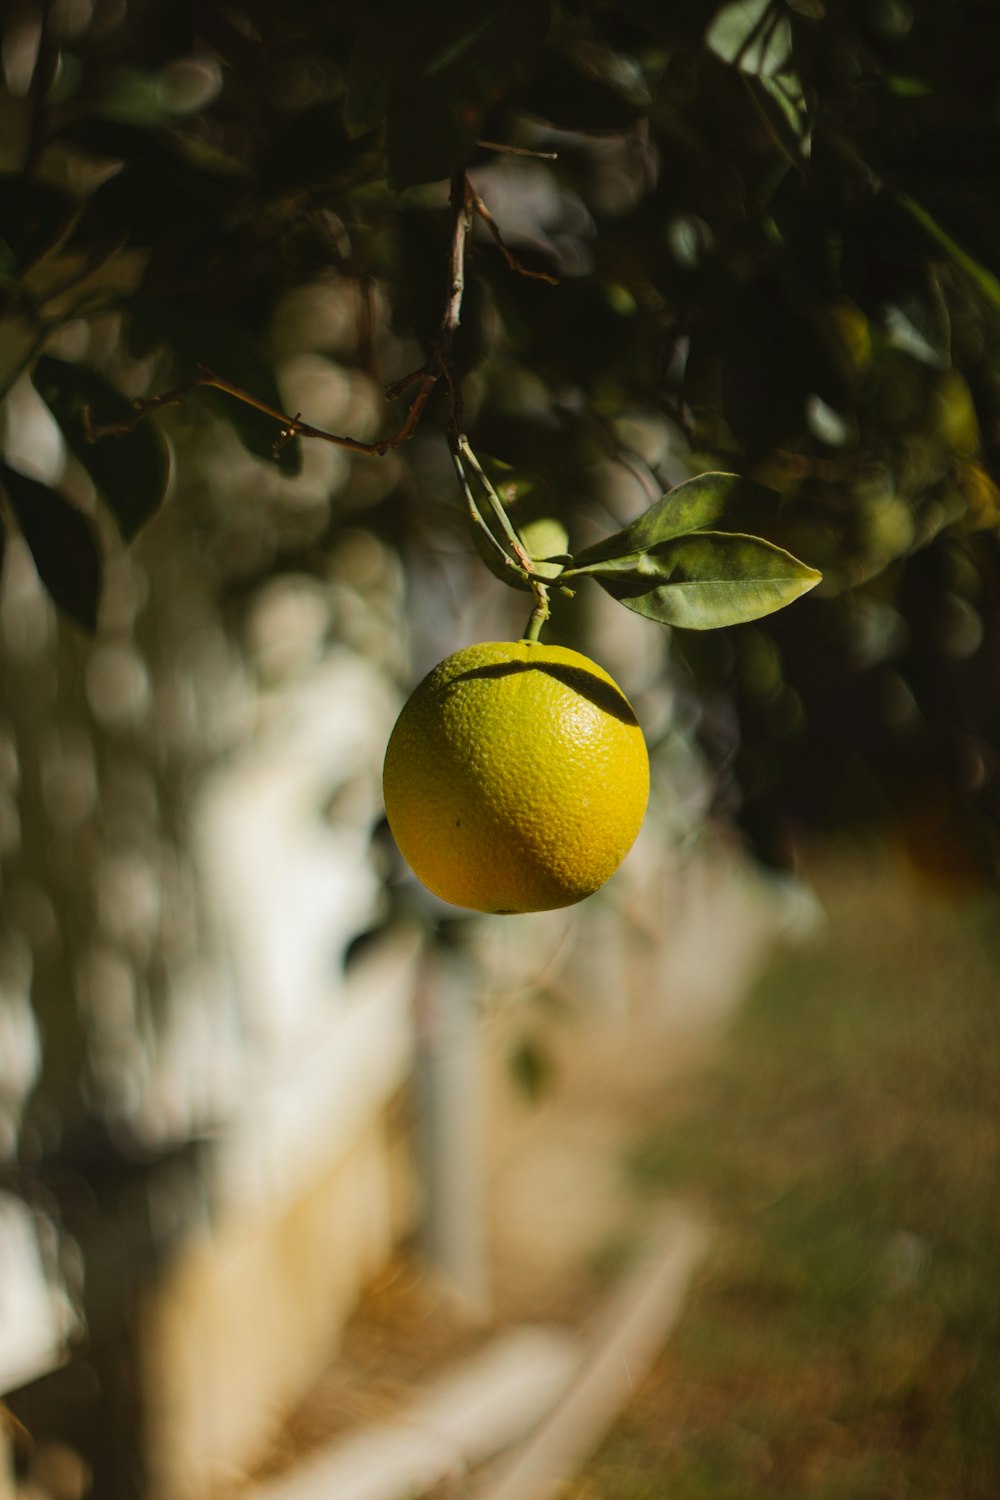 a lemon from a tree